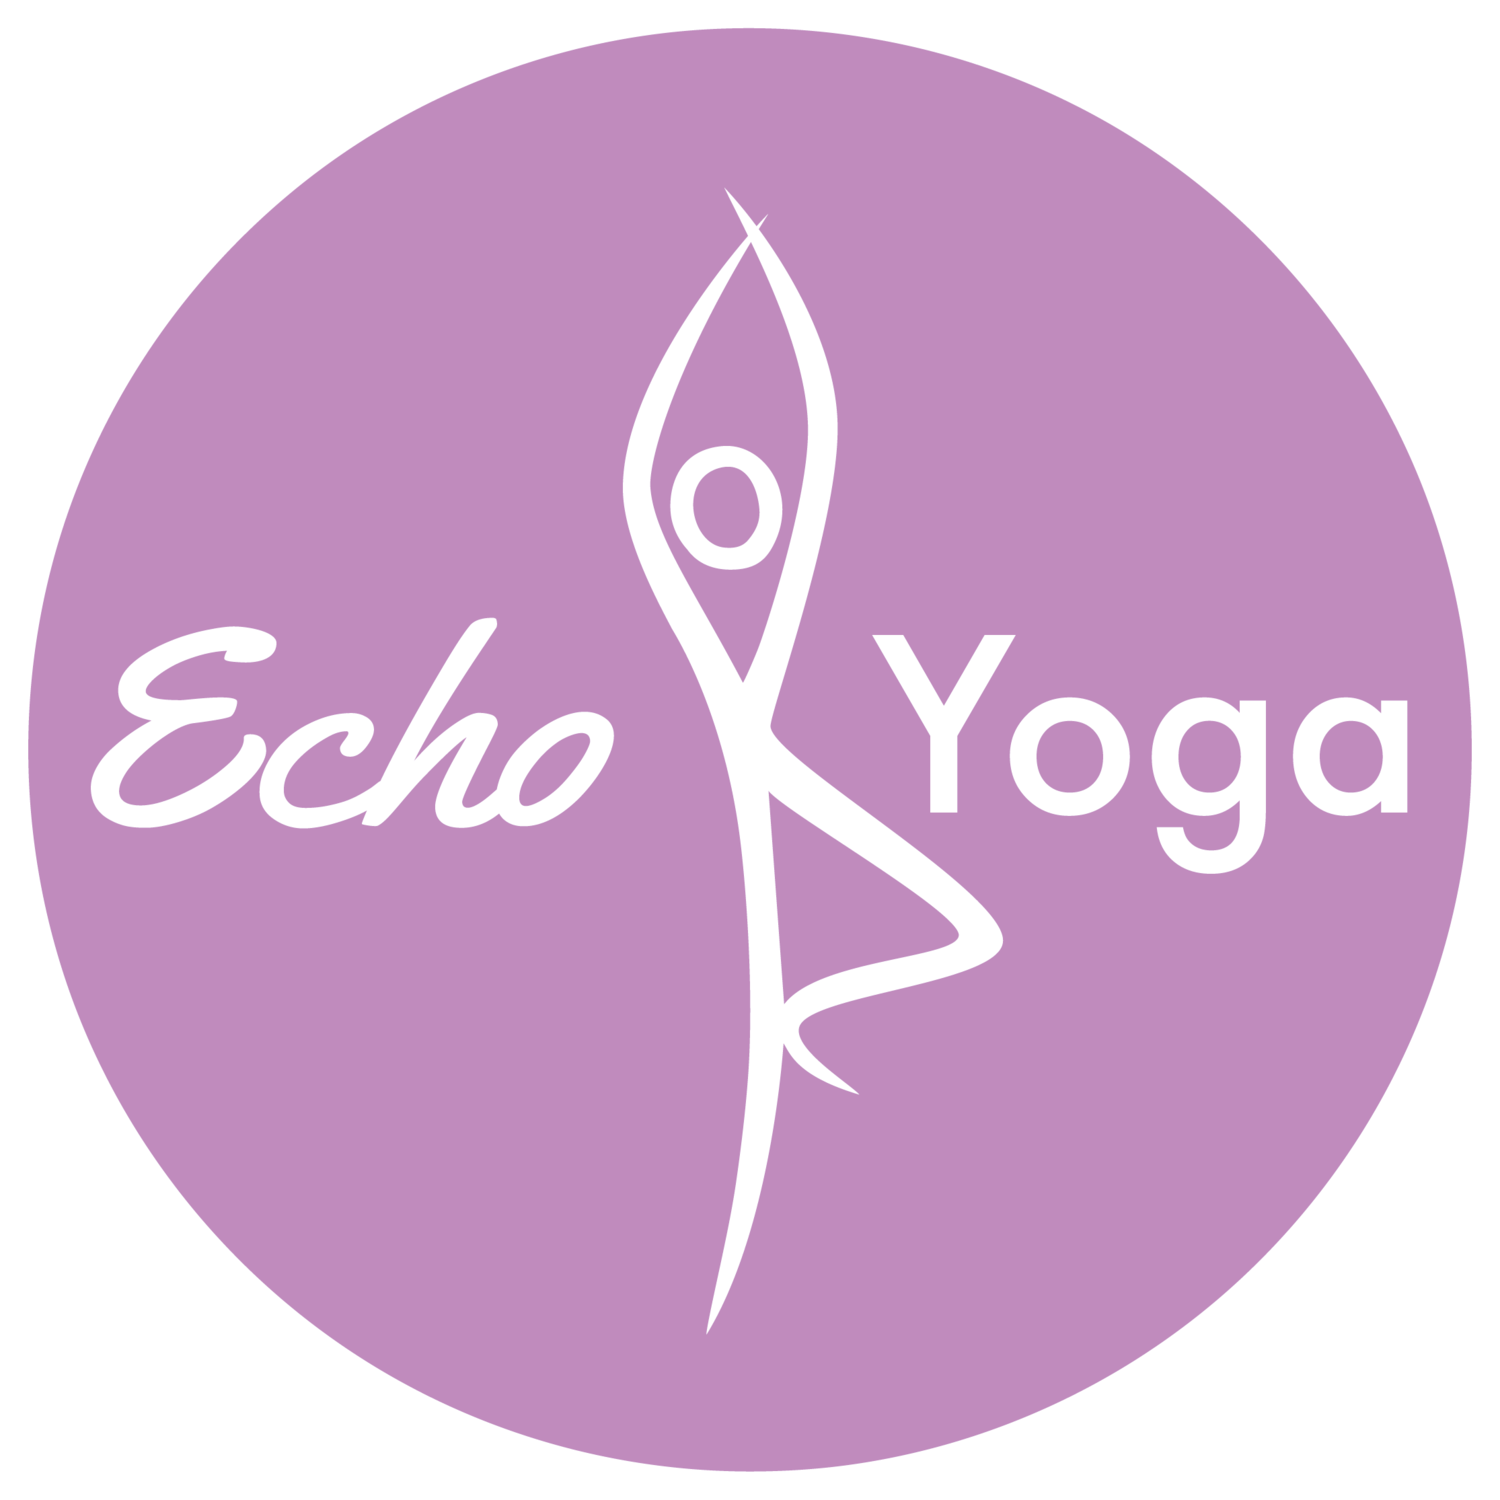 Echo Yoga